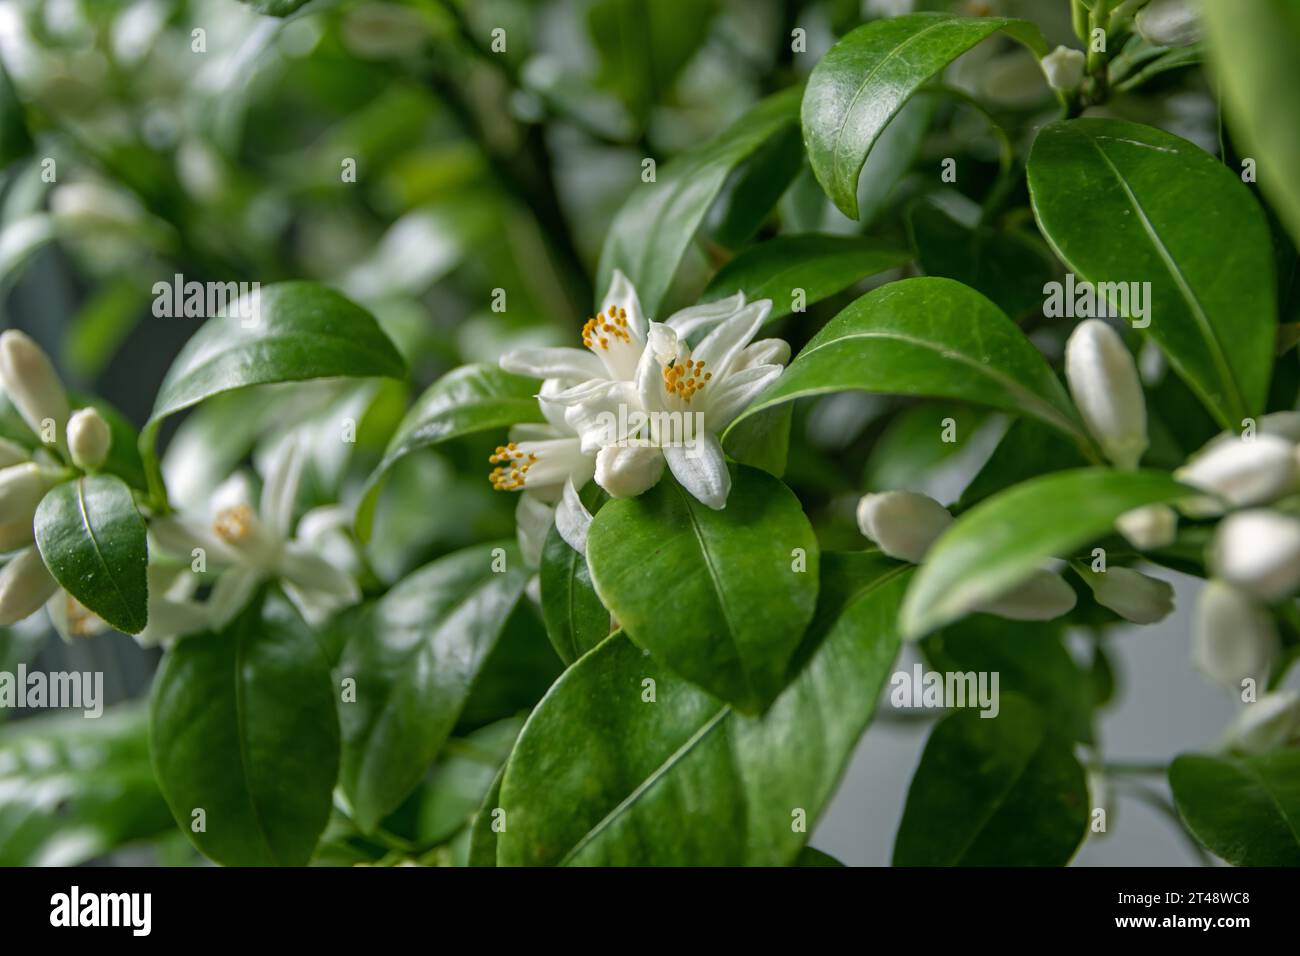 Calamondin or calamansi fruit flowers, buds and leaves. Abundant citrus hybrid blossom. Stock Photo